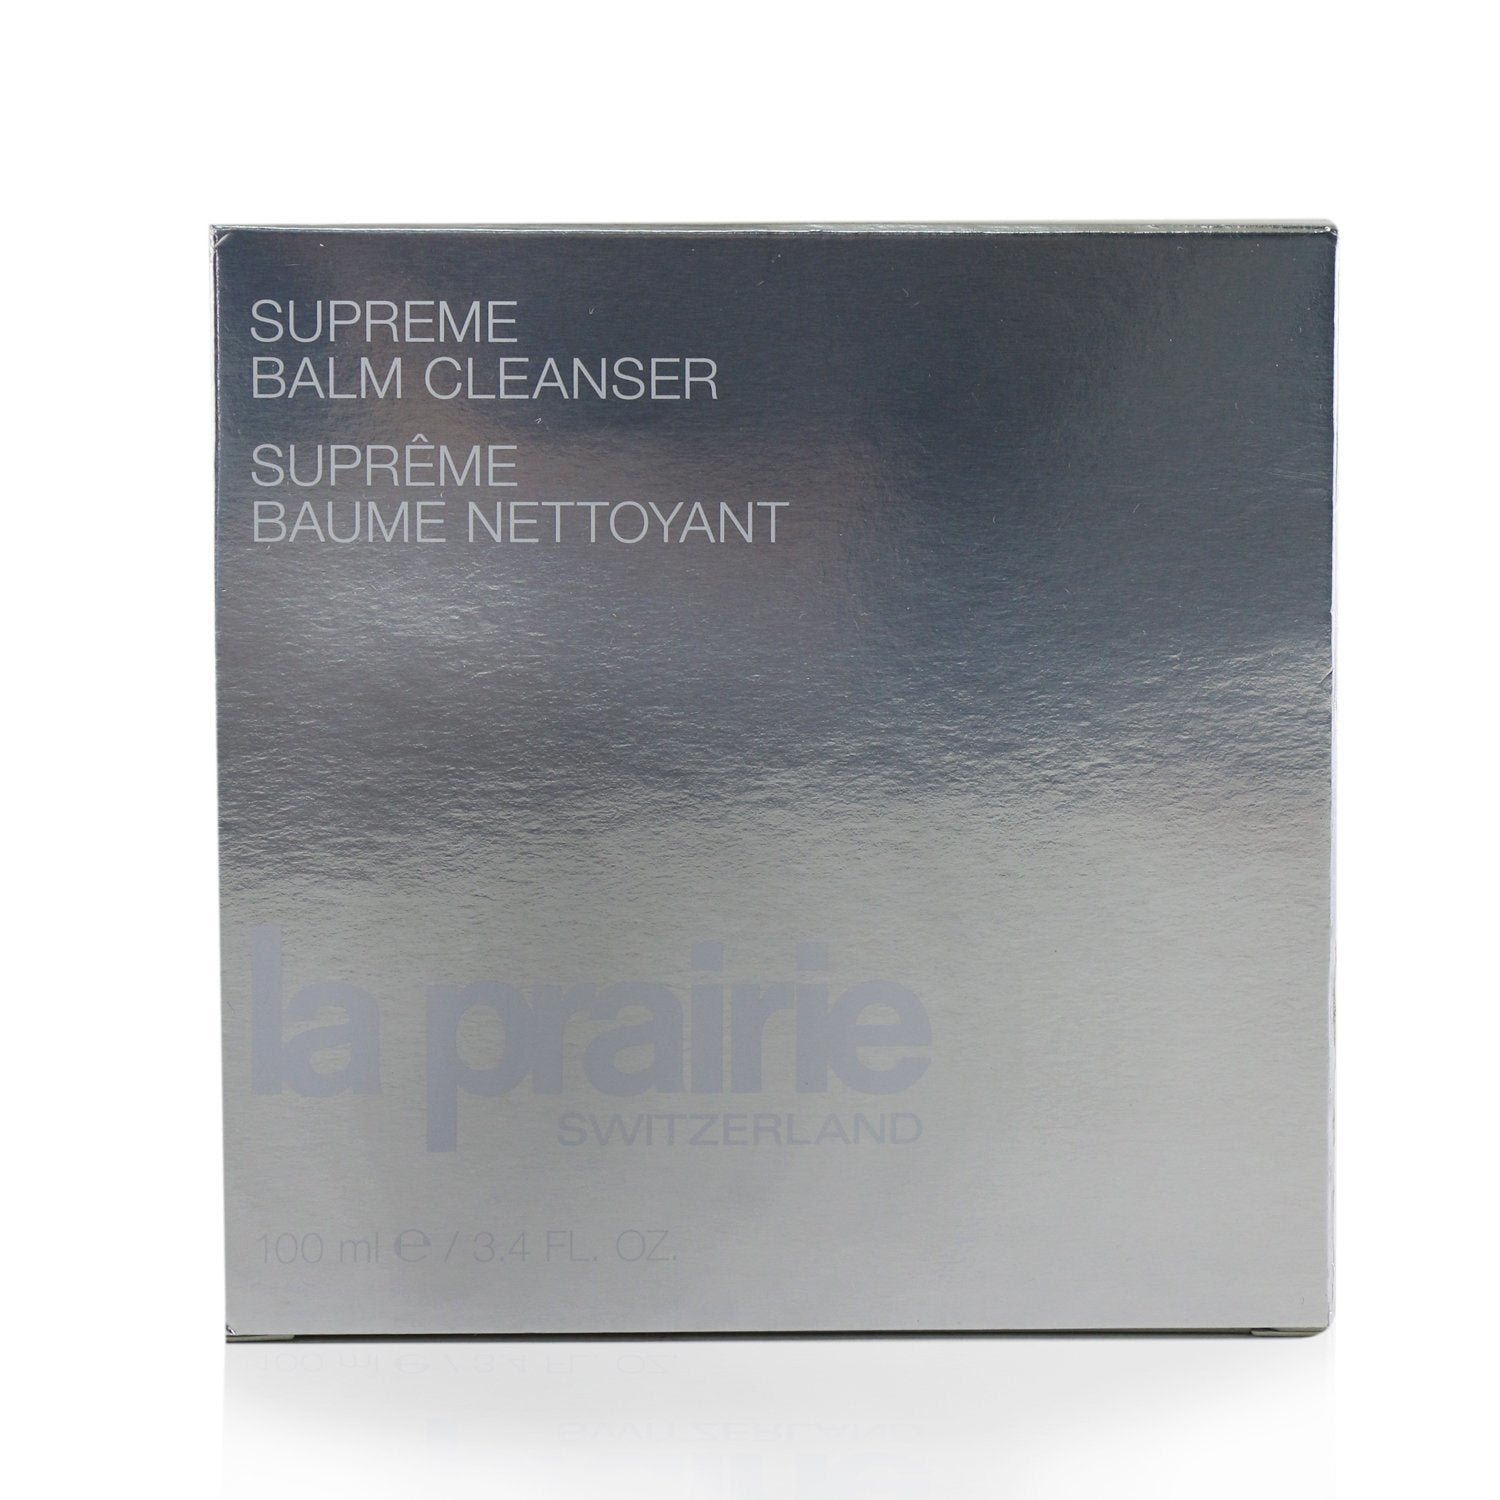 LA PRAIRIE - Supreme Balm Cleanser - 100ml/3.4oz 3P's Inclusive Beauty